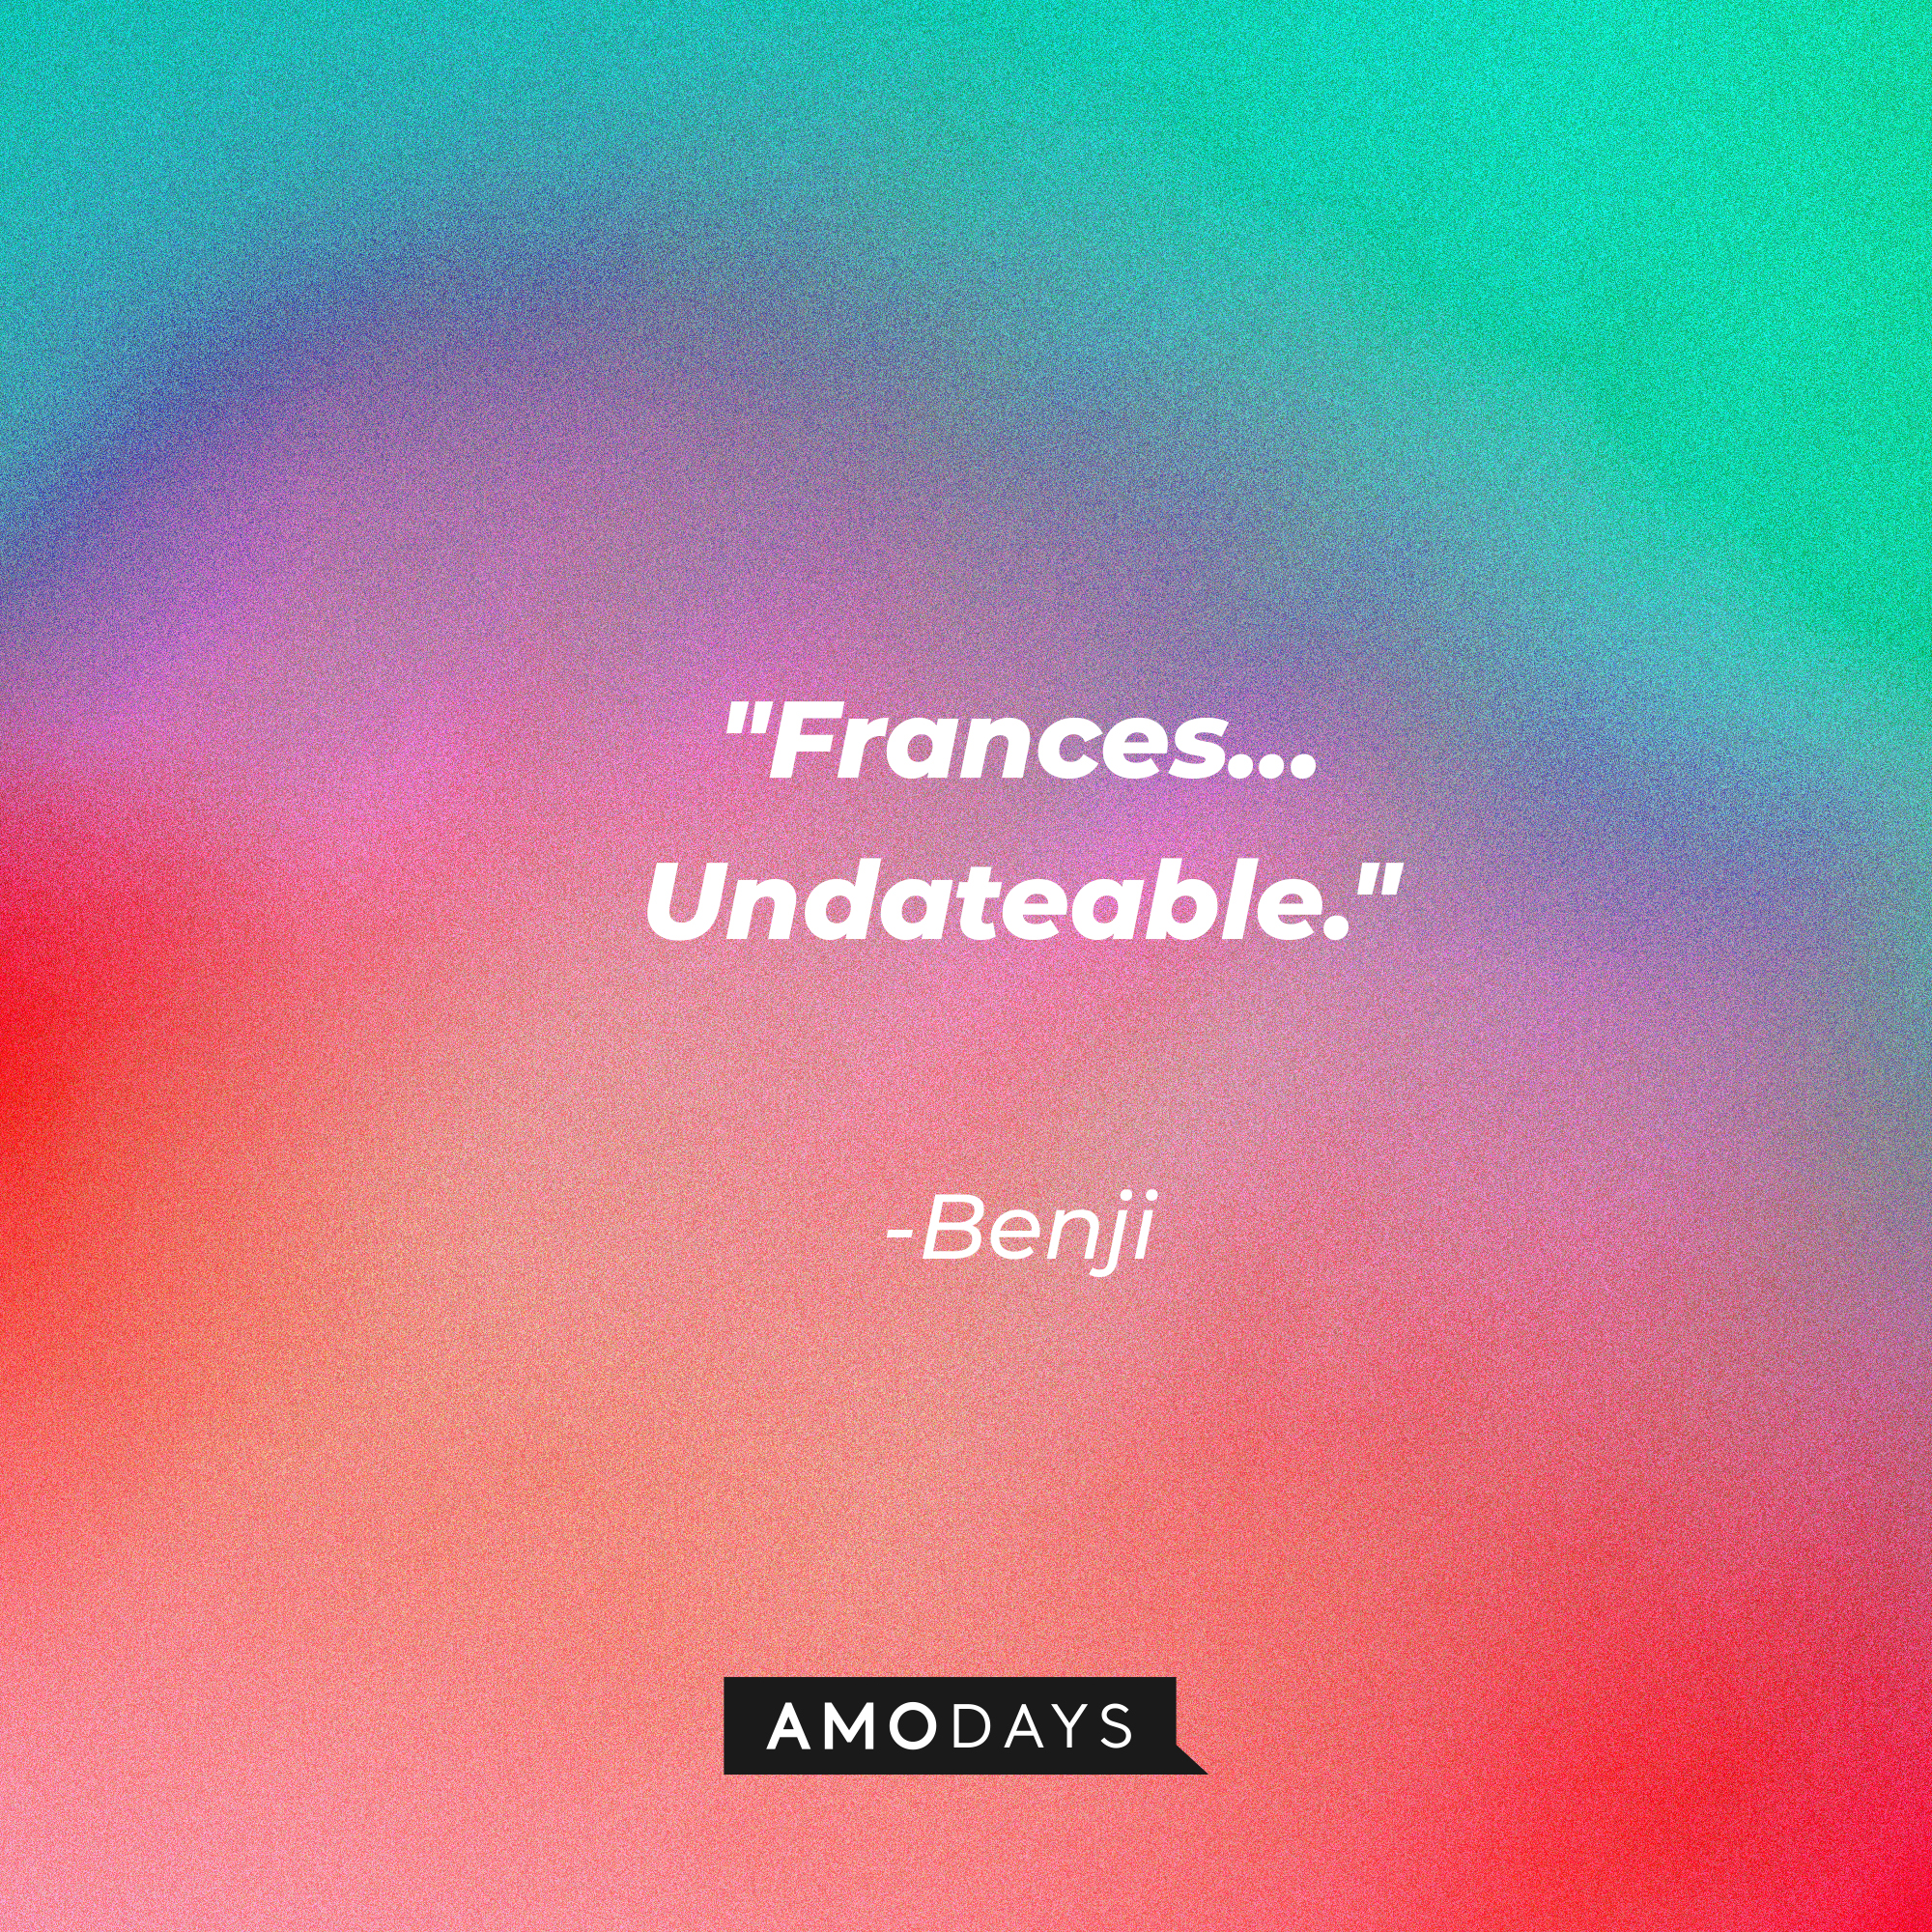 Benji's quote: "Frances… Undateable." | Source: AmoDays